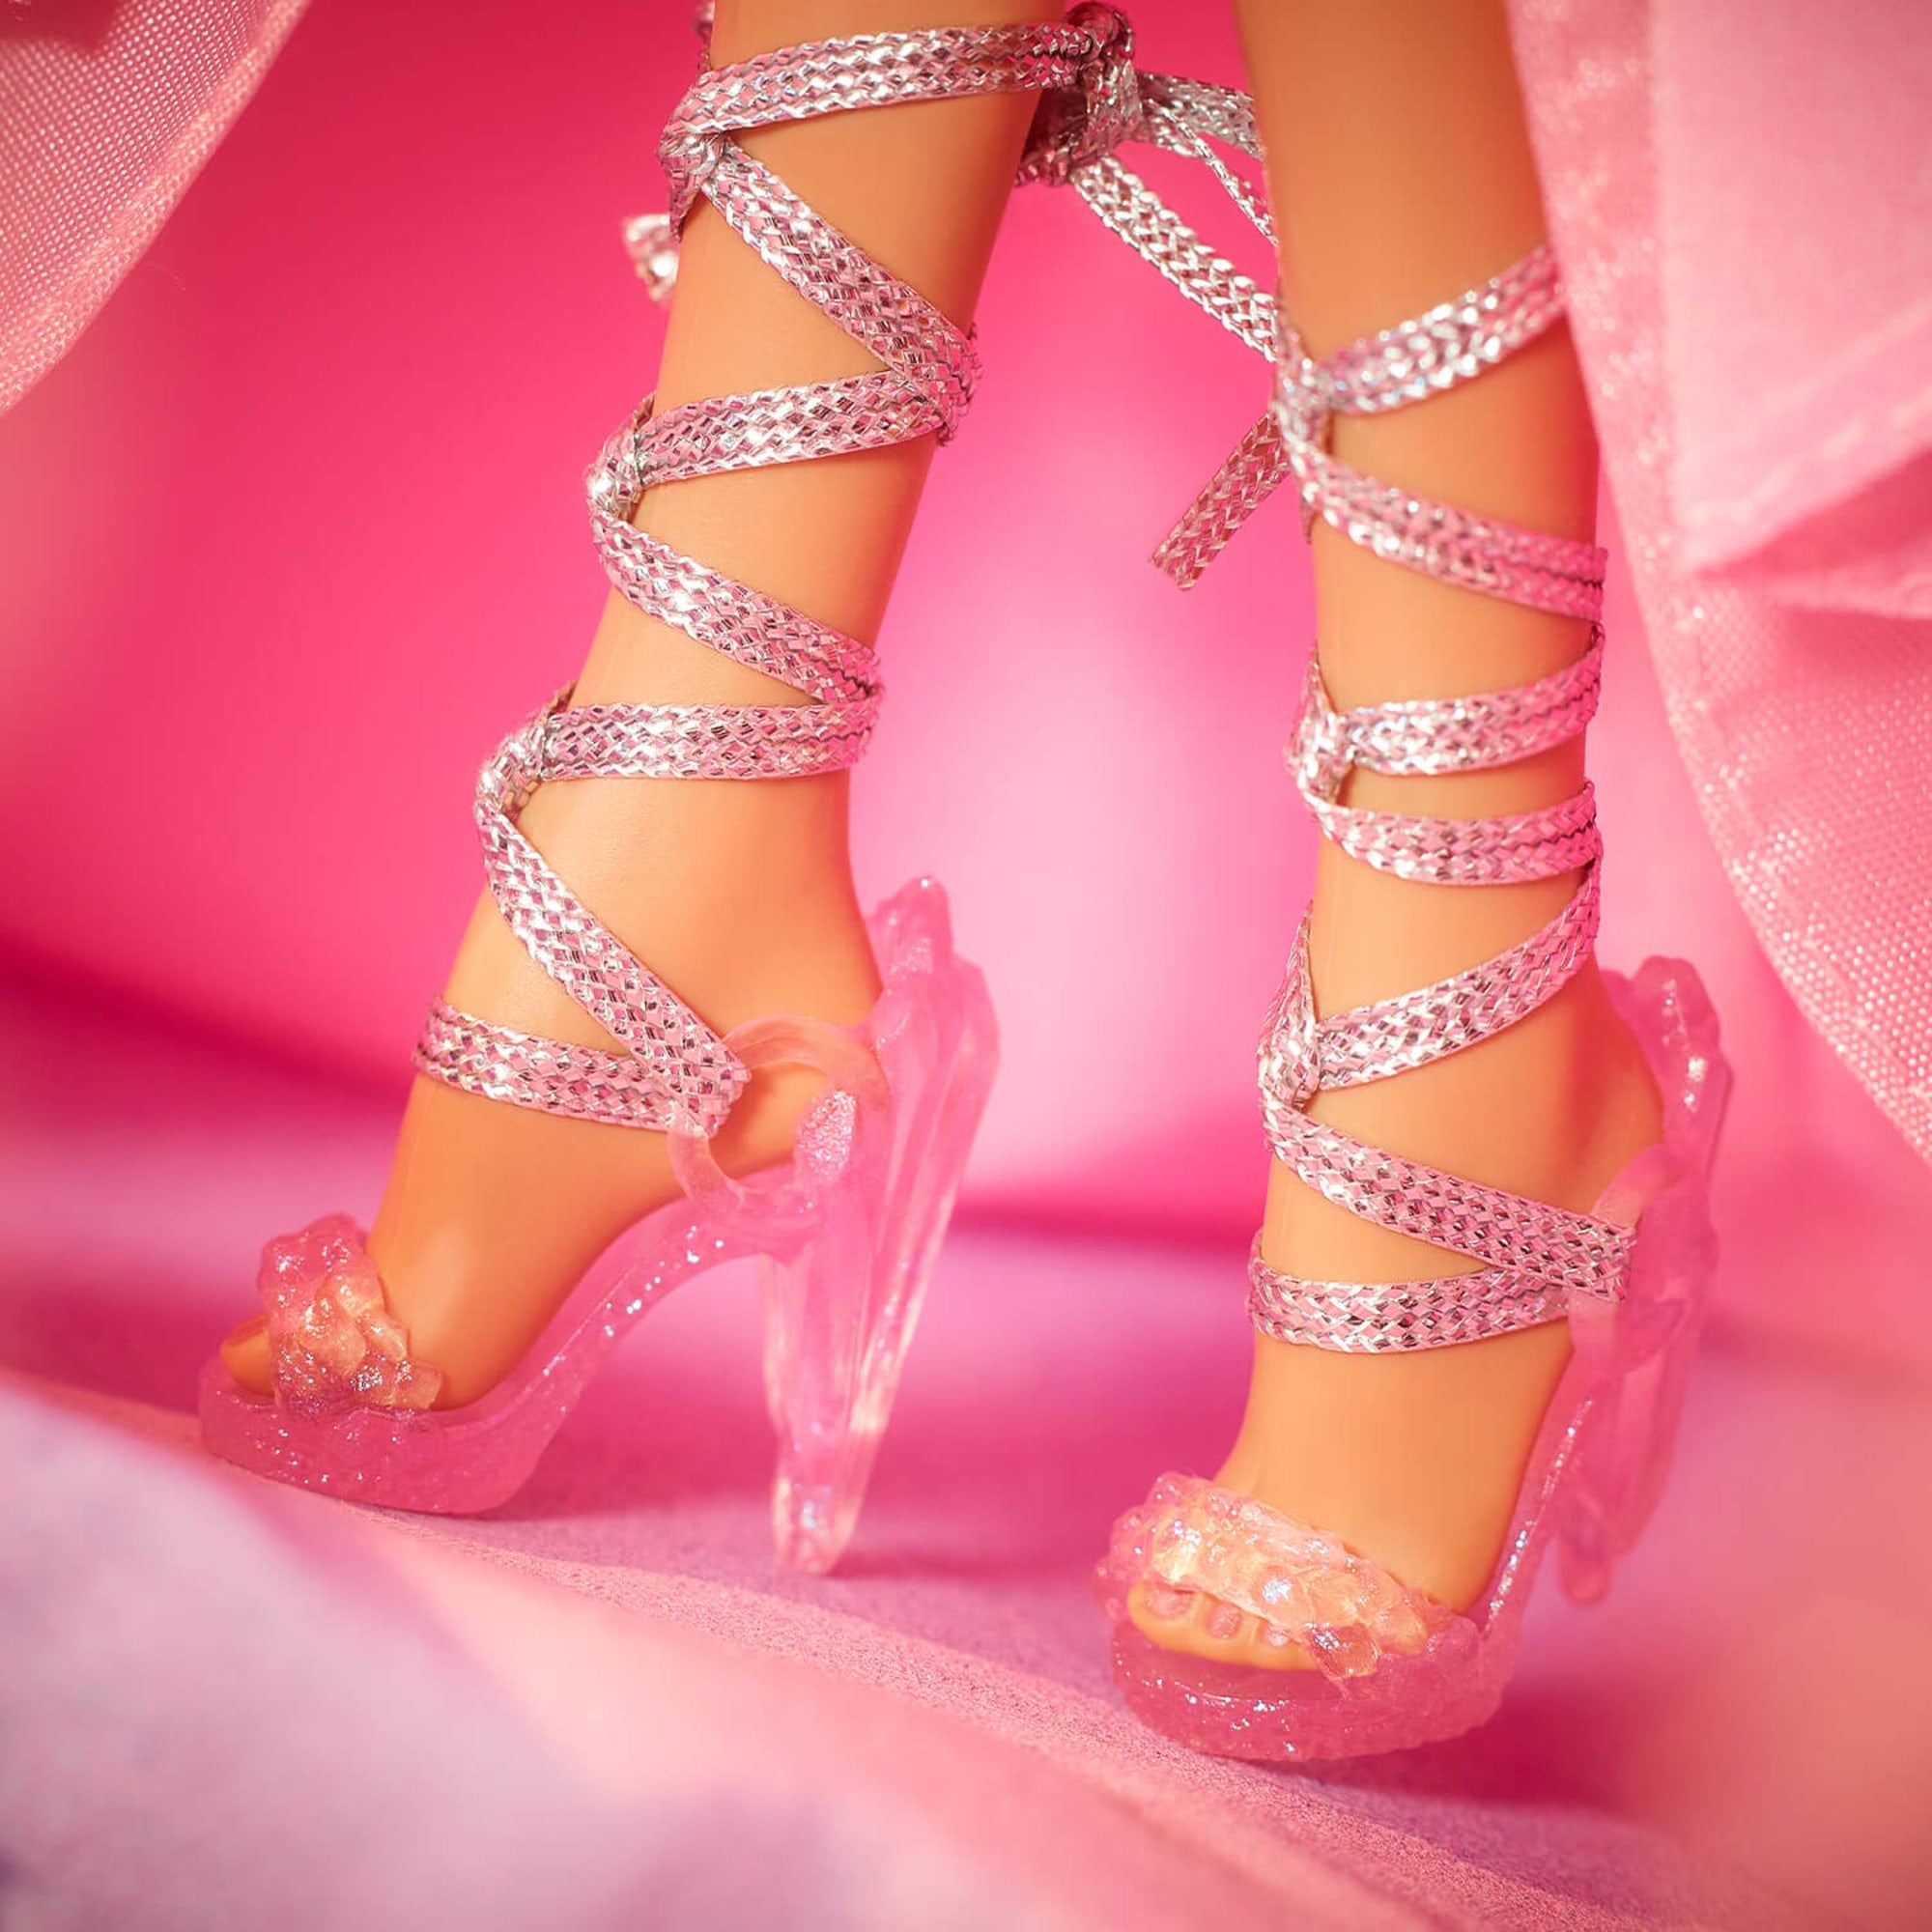 Barbie Doll Shoes Sale, Barbie Shoes Crystal, Shoes Barbie Closical